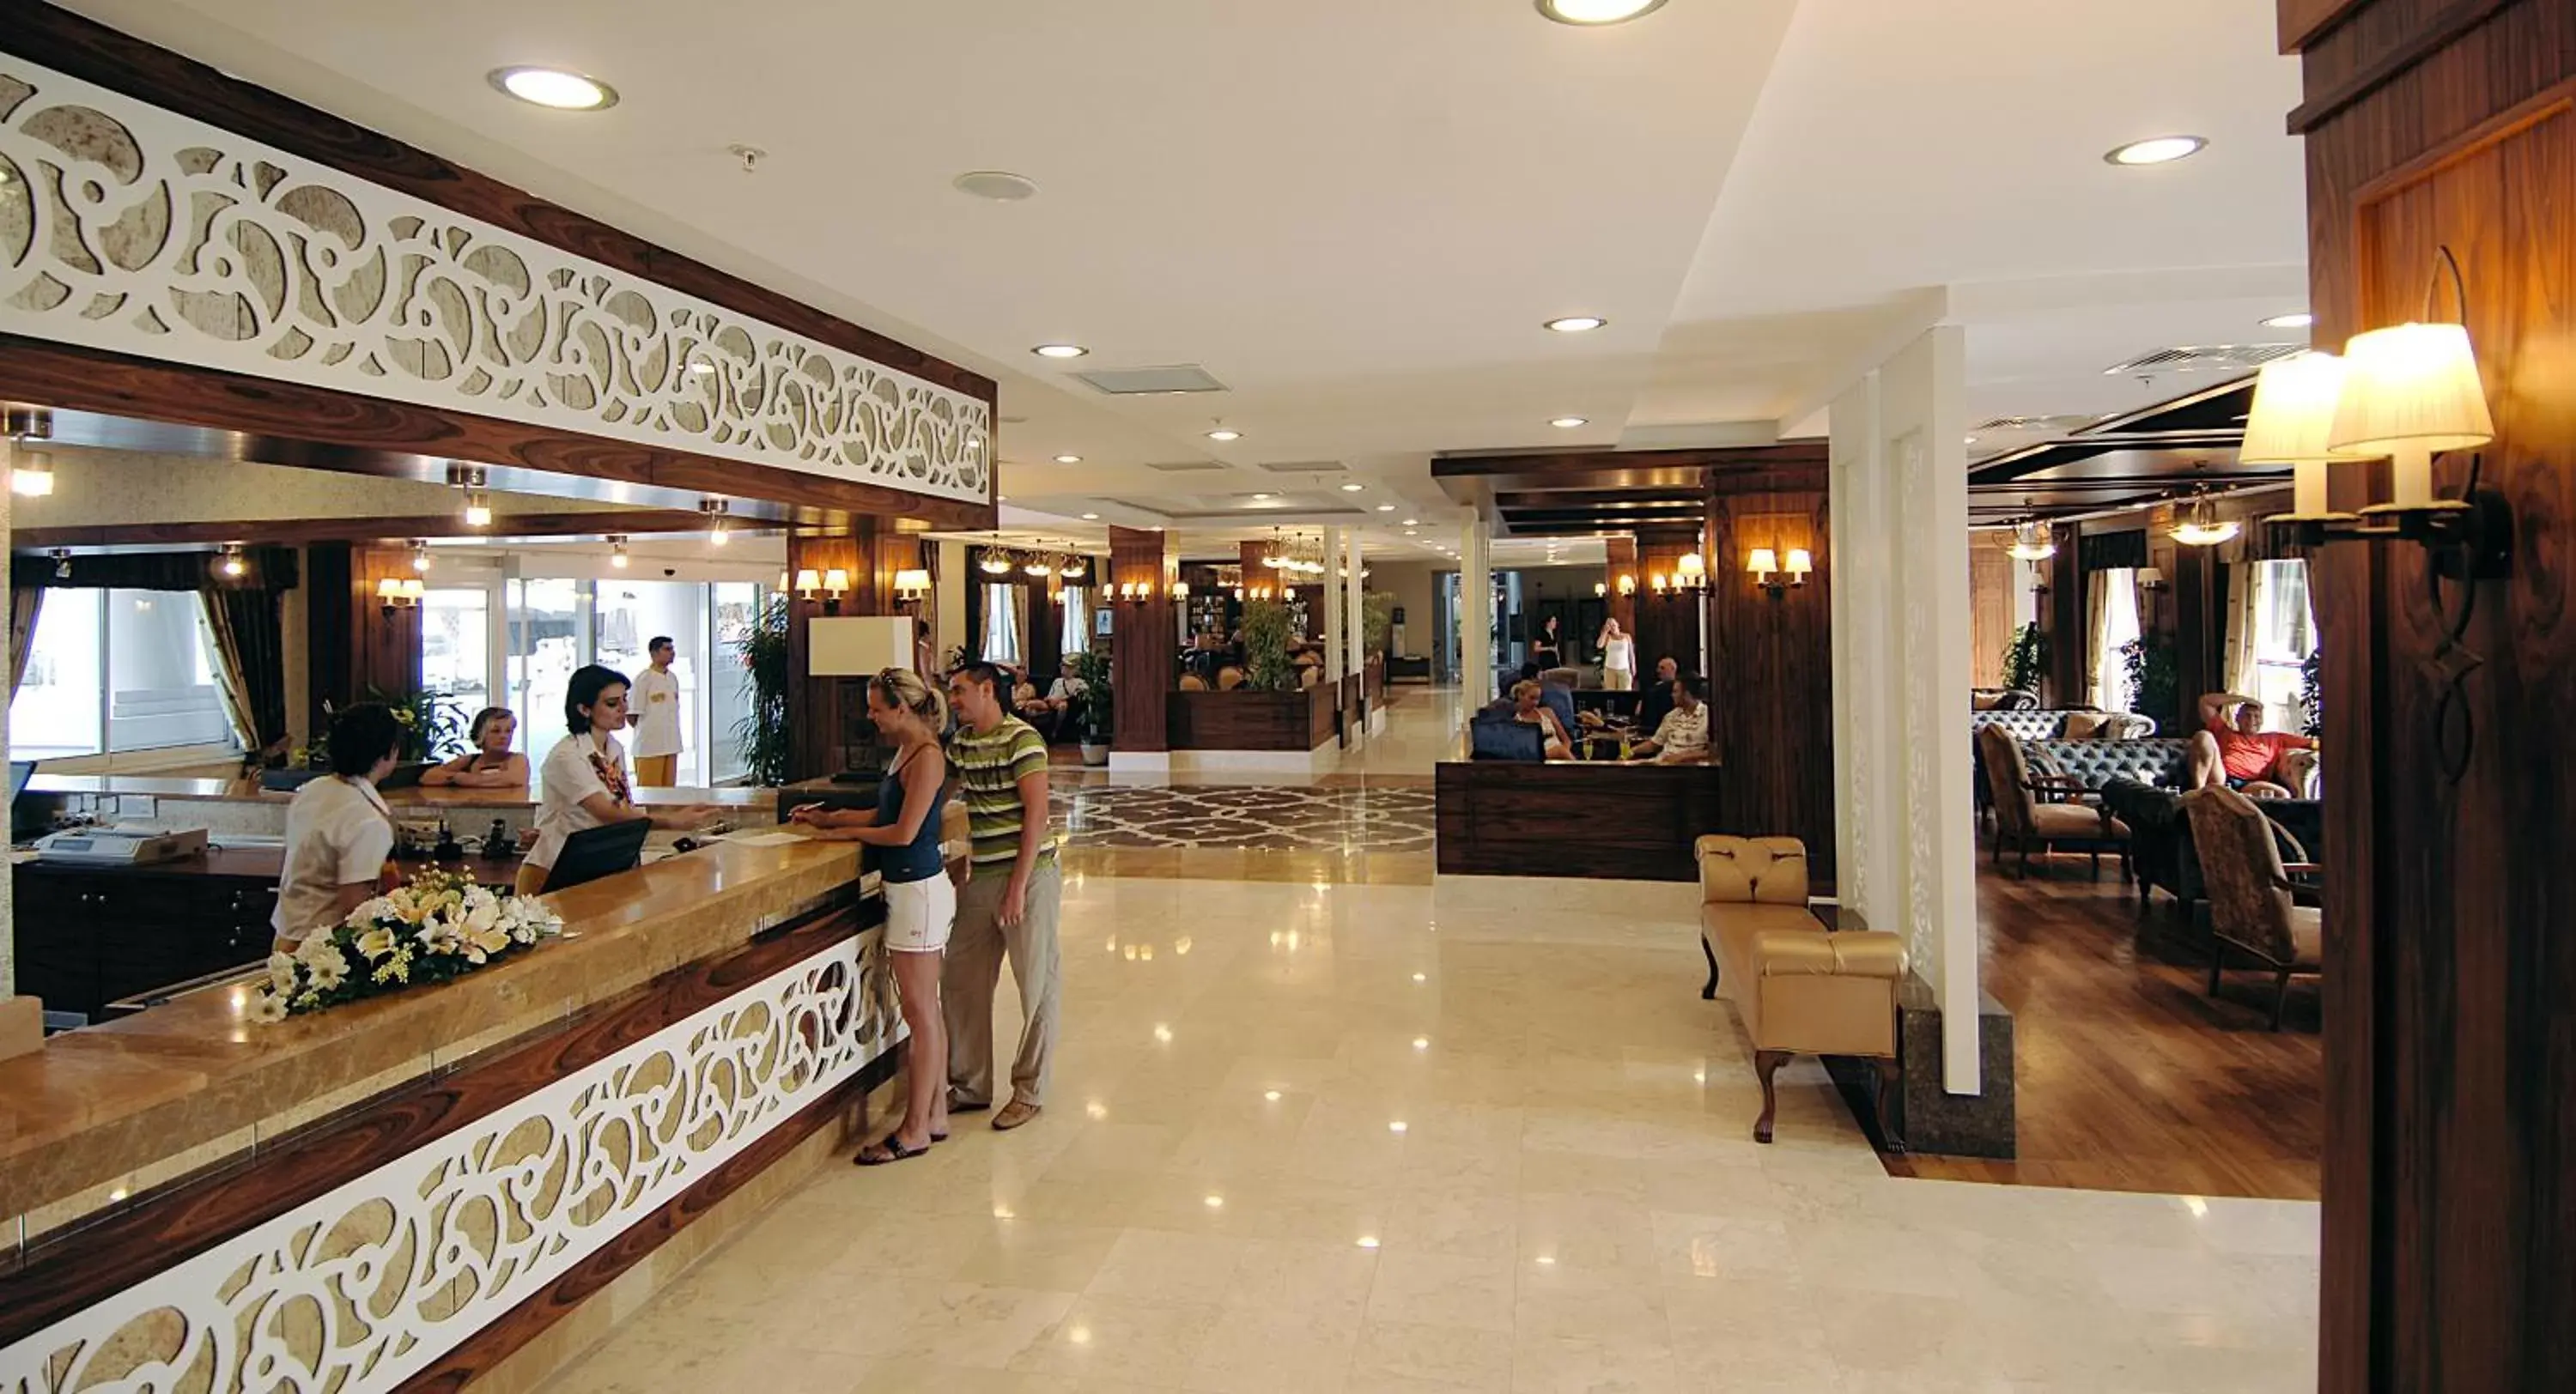 Lobby or reception in Viking Star Hotel